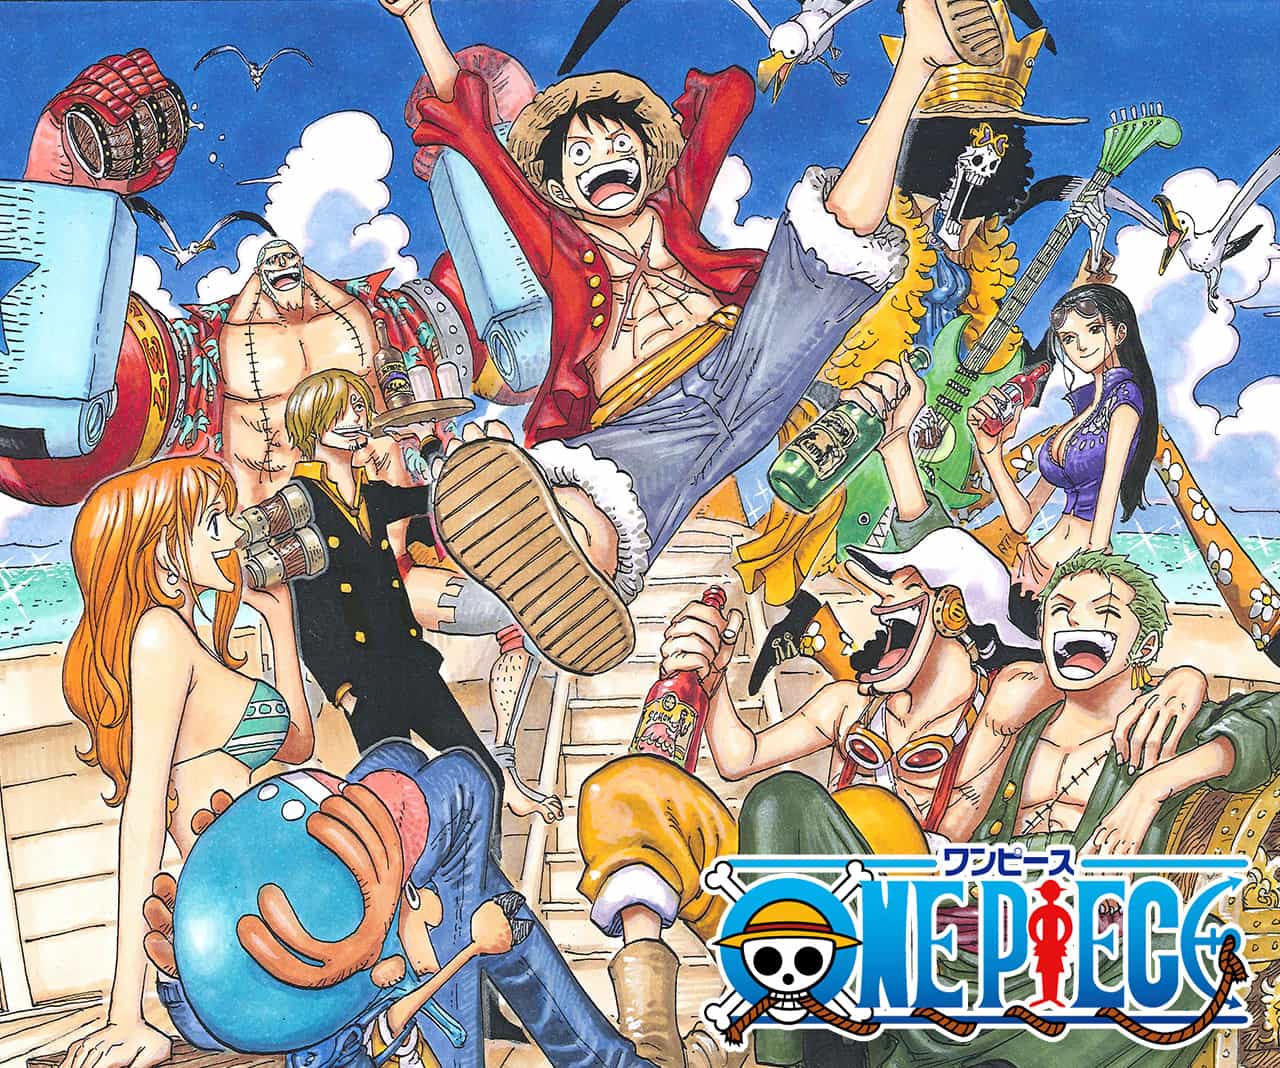 Crunchyroll - One Piece Film Red Comes Home in Crunchyroll July